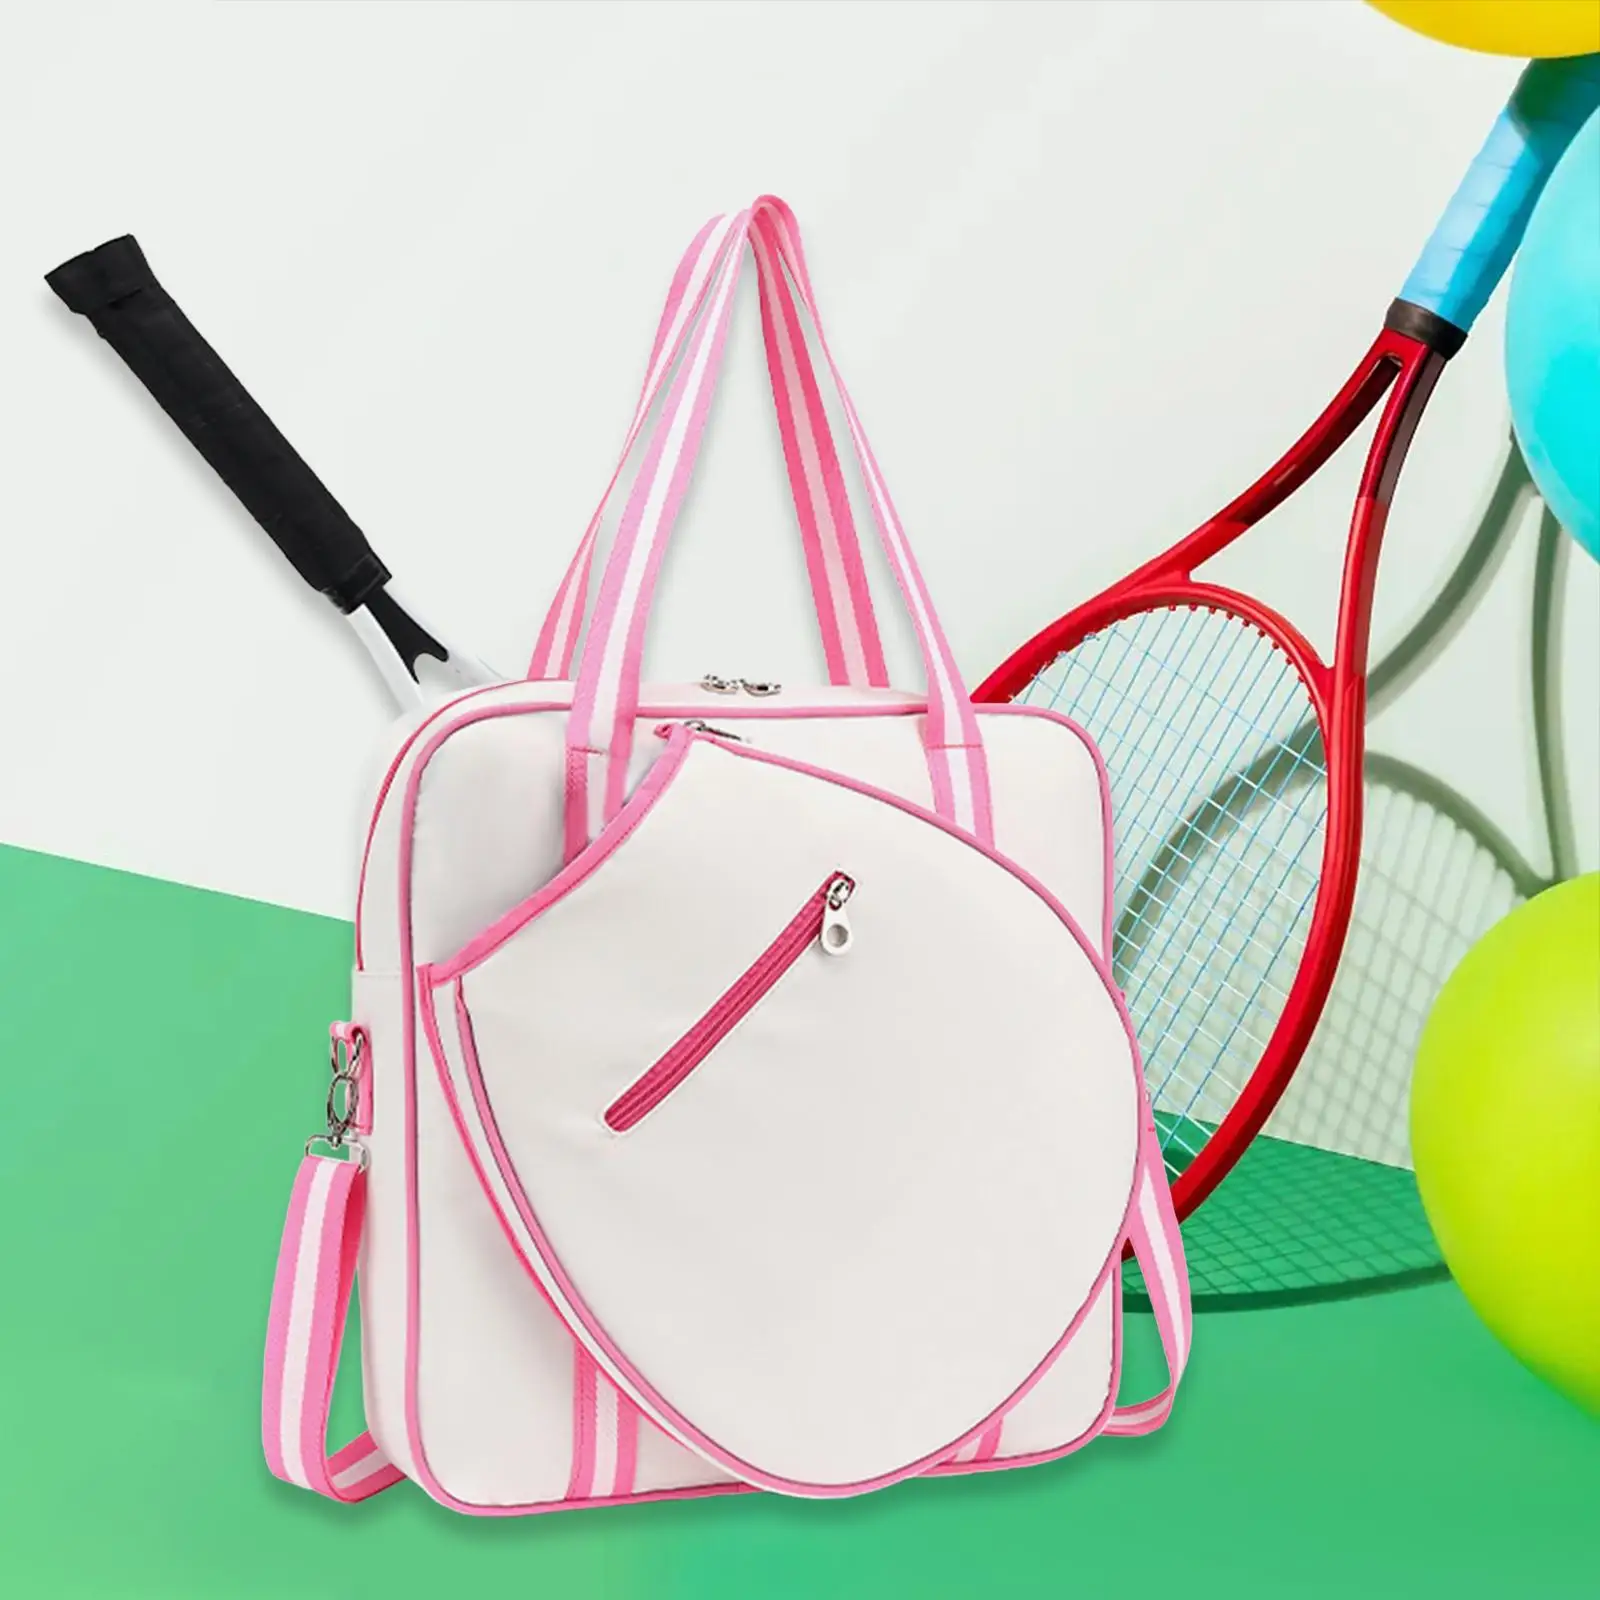 Tennis Racket Shoulder Bag Travel Tote Bag Multifunctional with Multi Pockets for Biking, Outdoor Tour, Gym, Picnic, Hiking